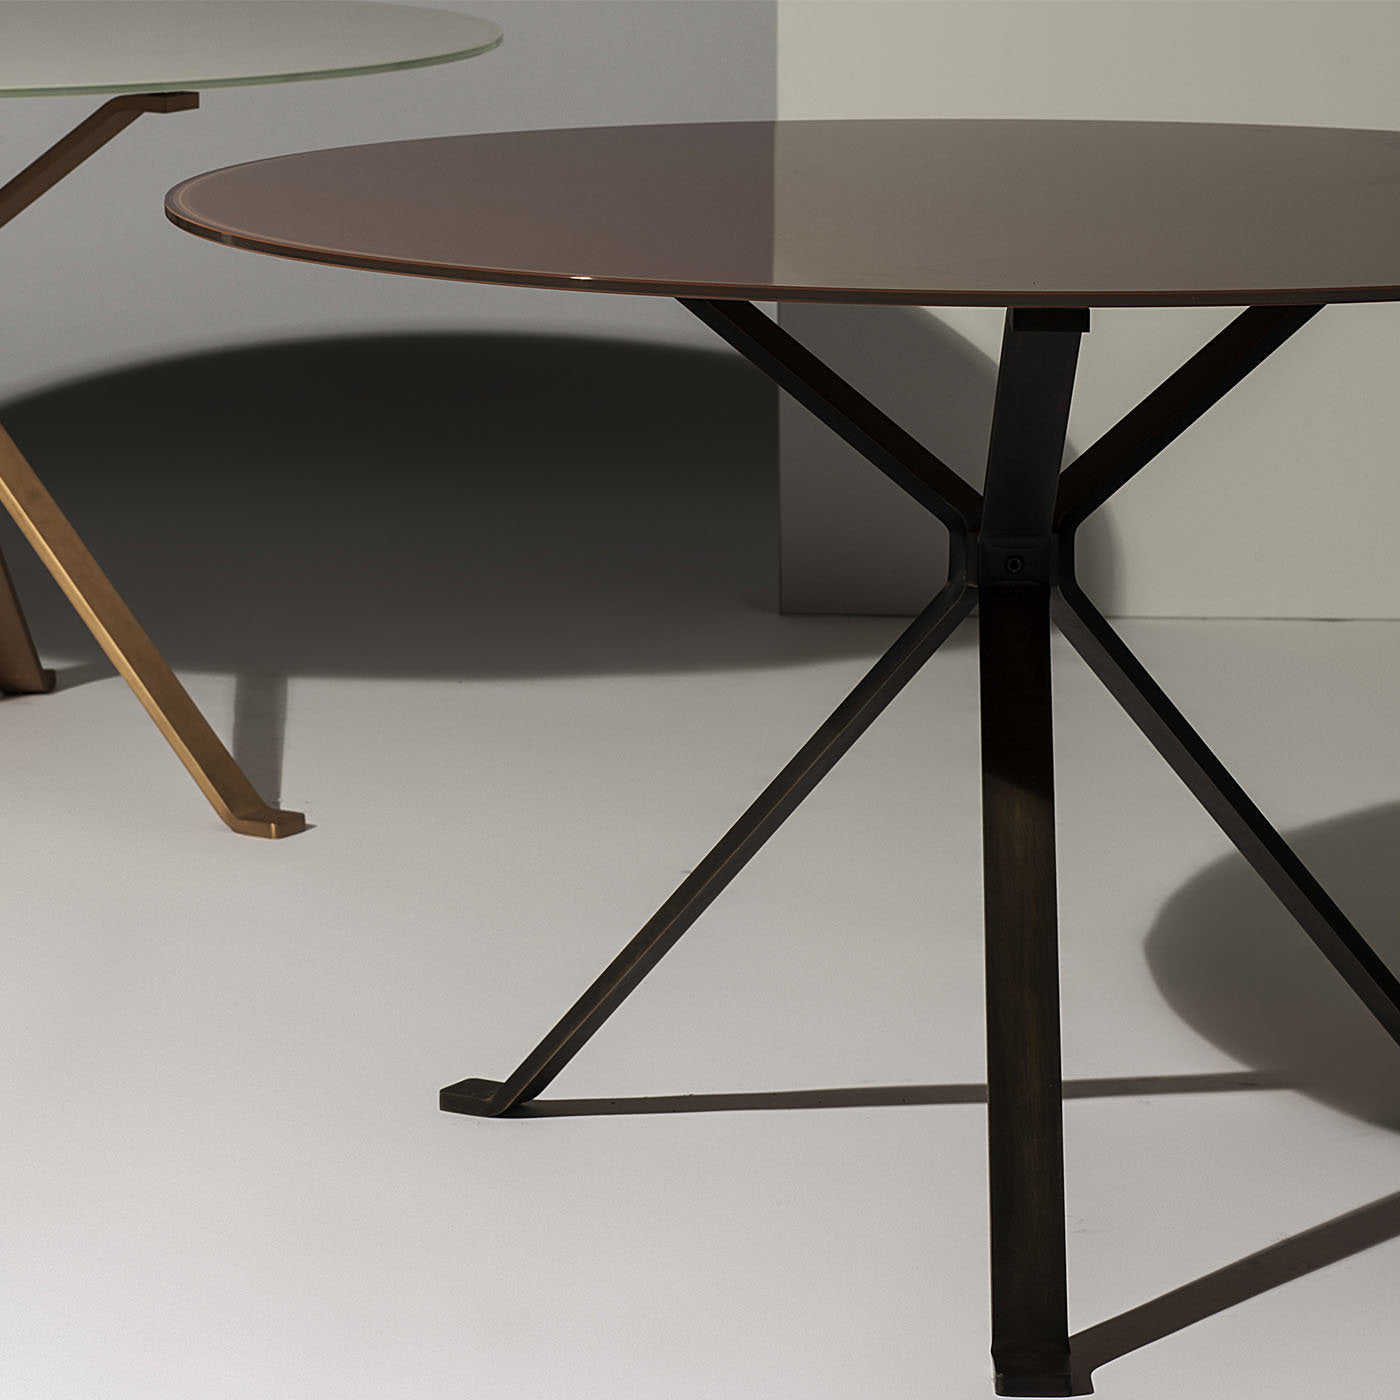 Revo Green 100 Coffee Table by Giovanni Giacobone + Massimo Roj Progetto CMR - Alternative view 1